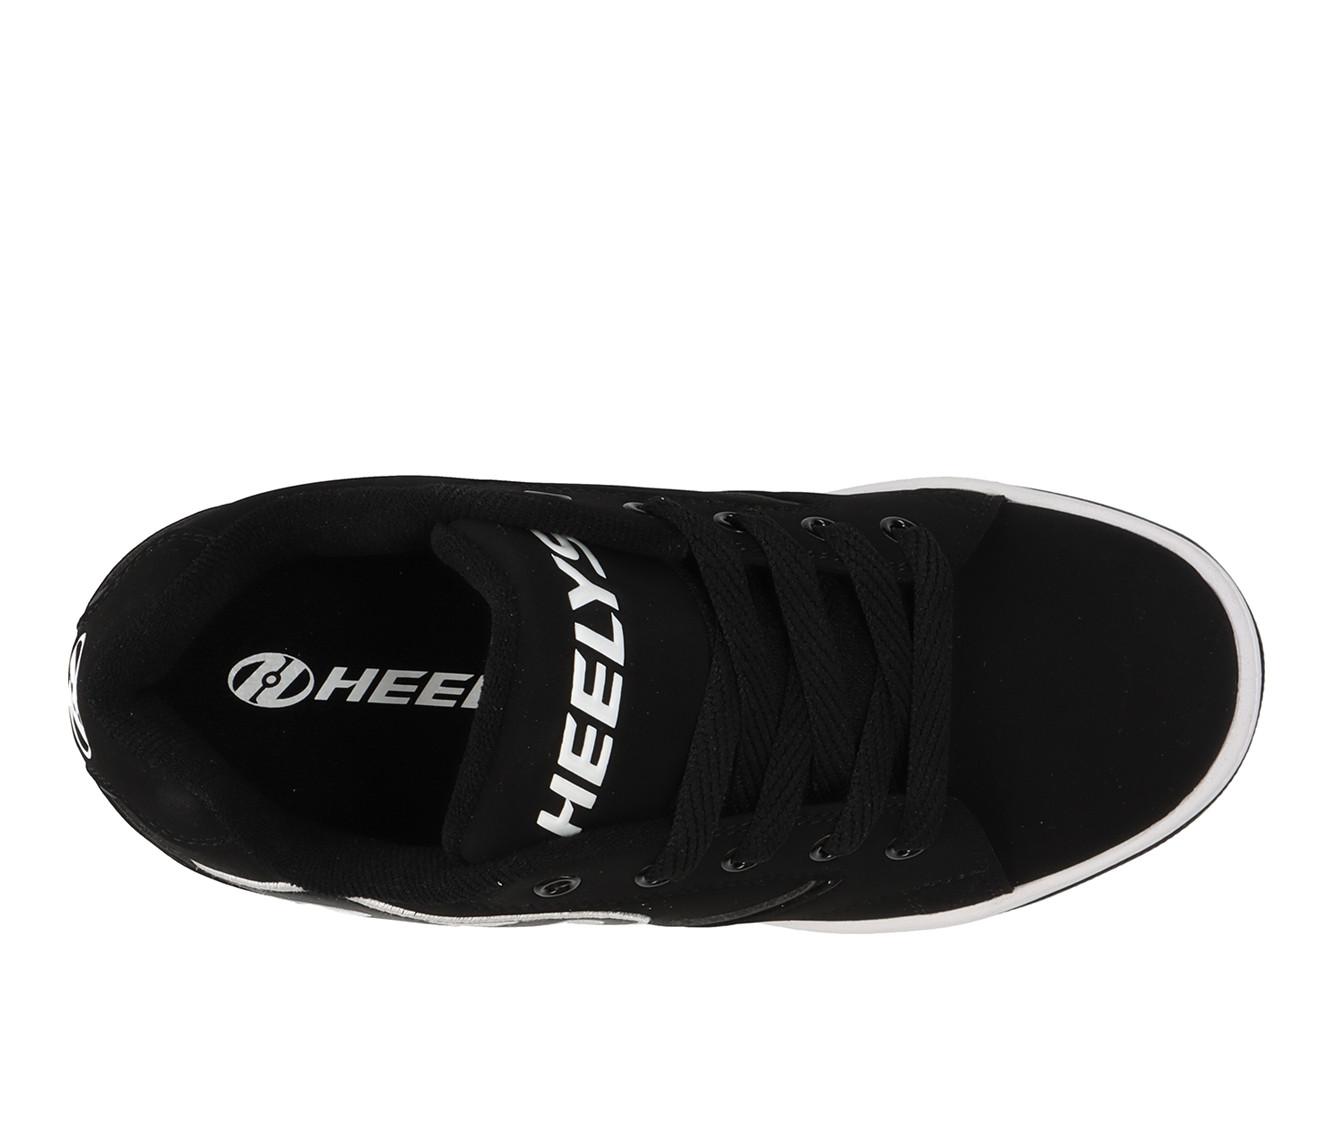 Men's Heelys Voyager Skate Shoes